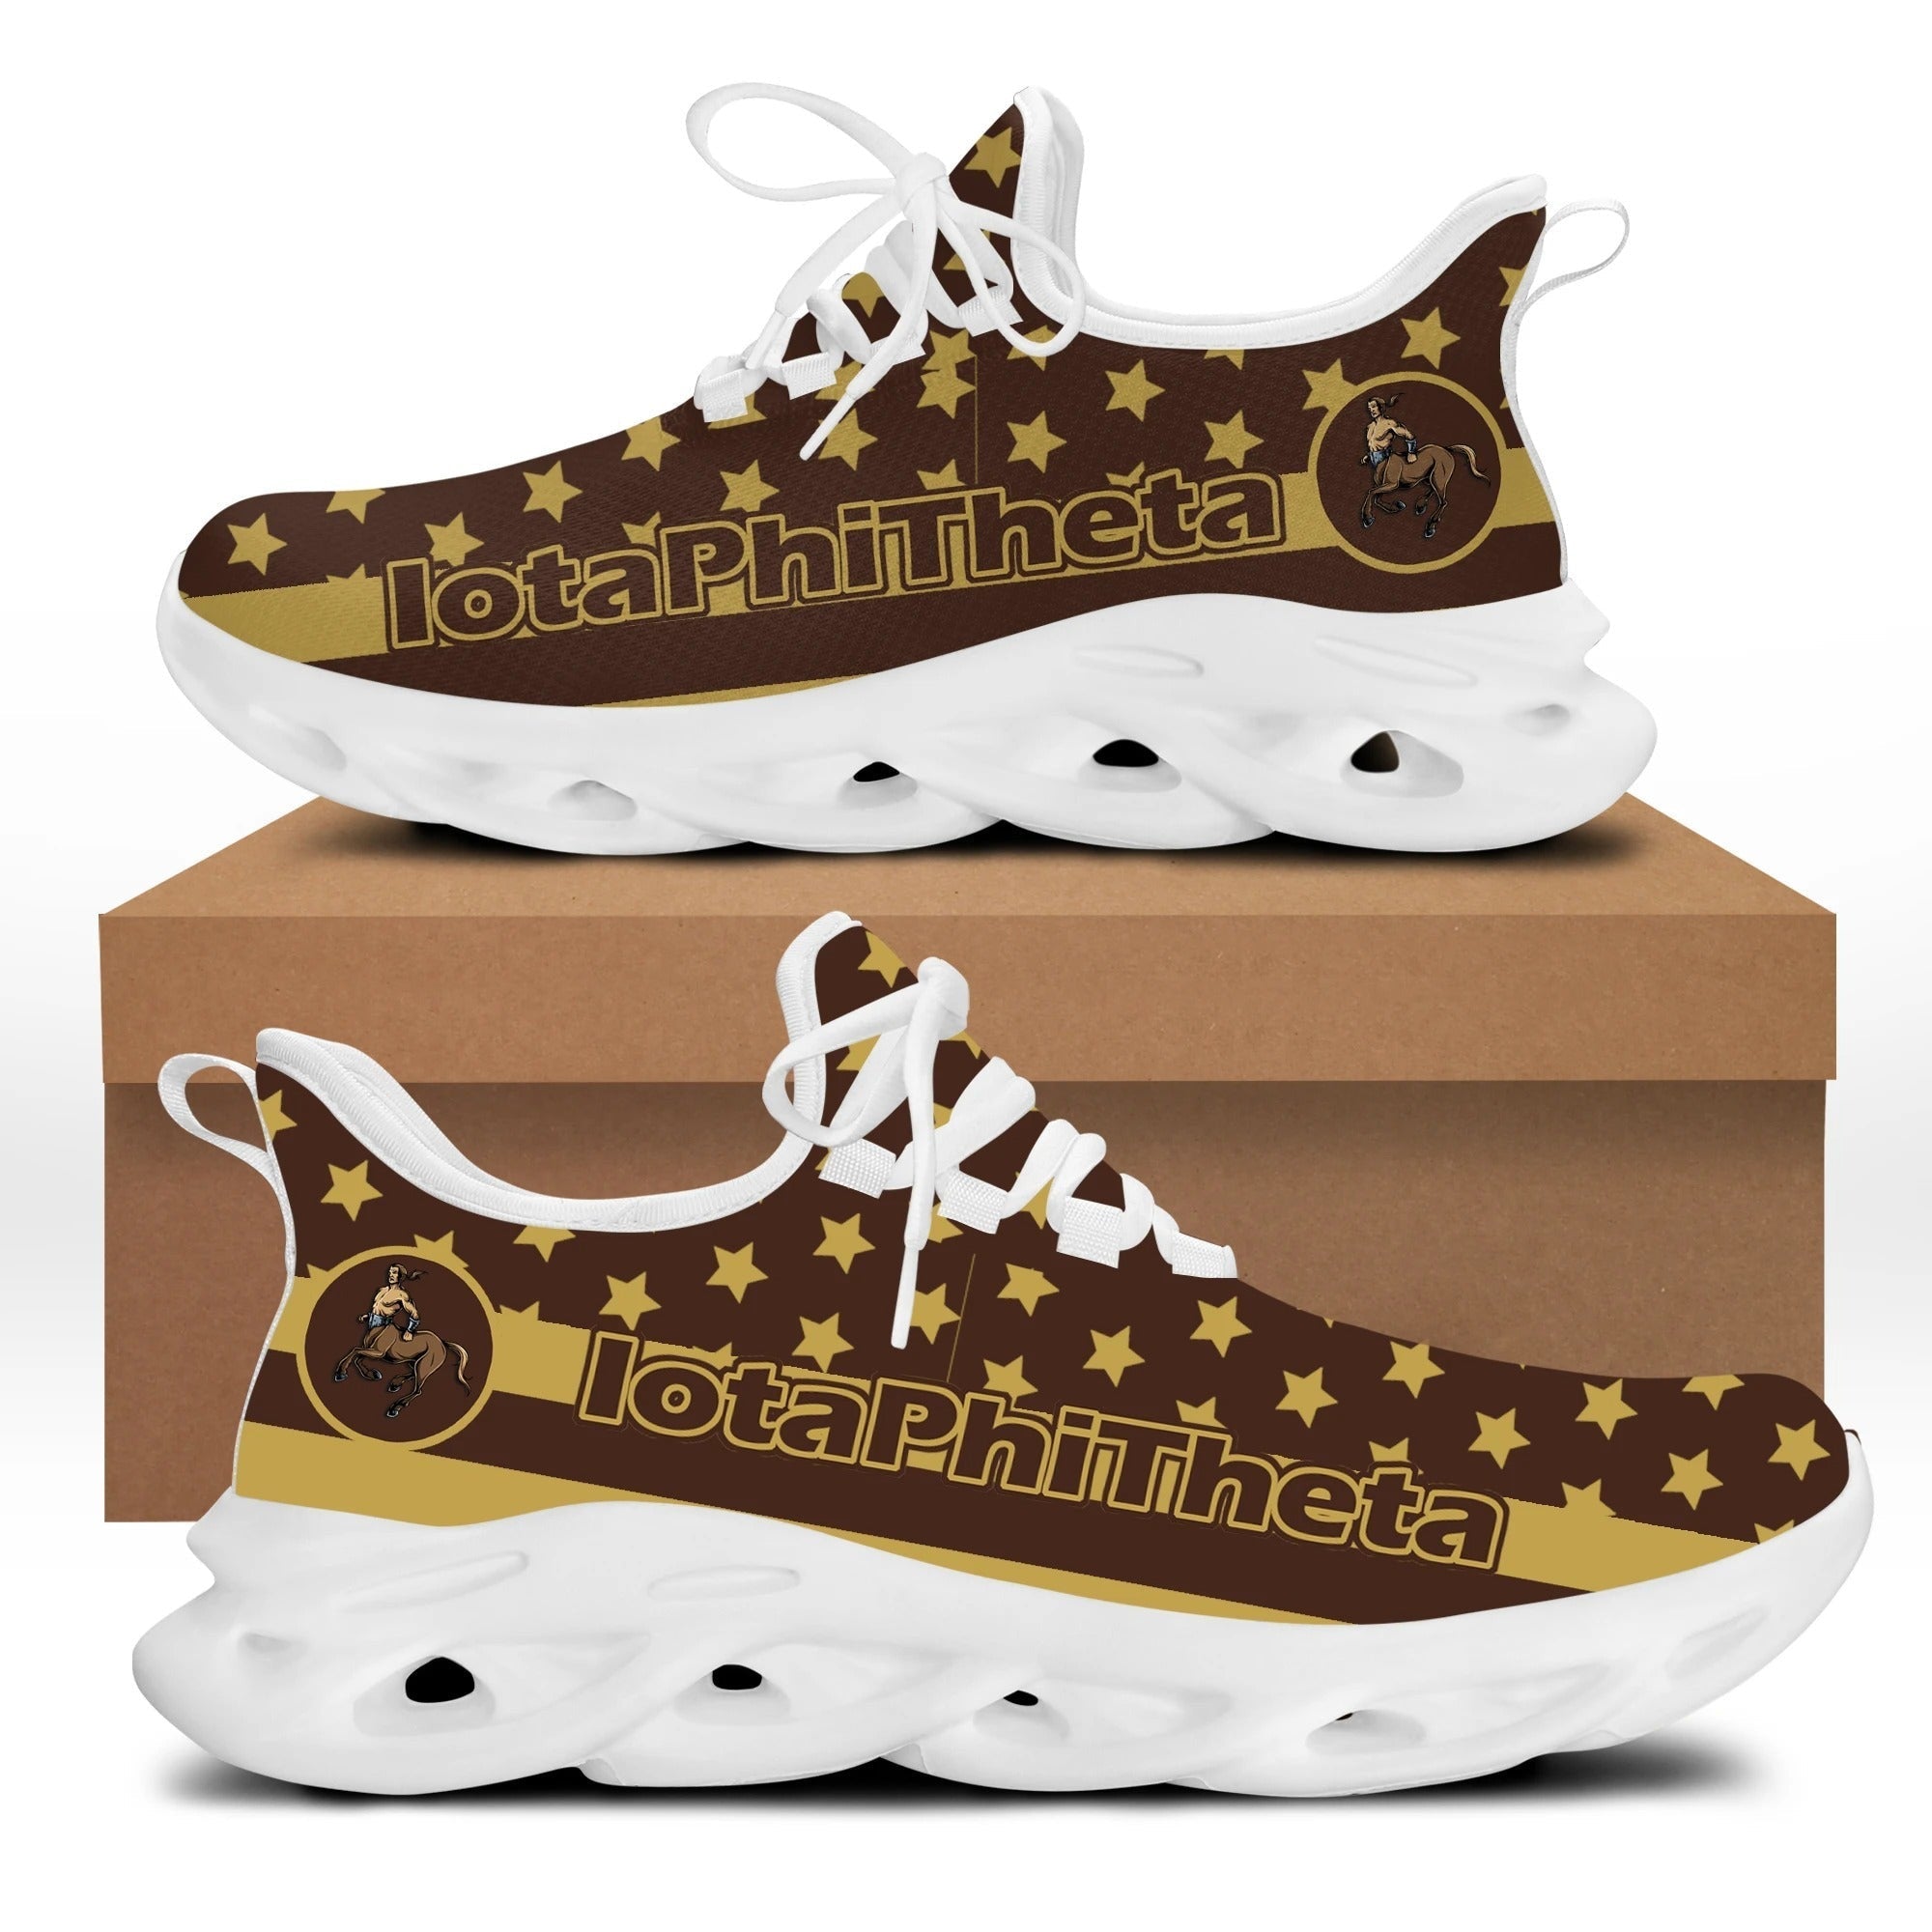 Tothetopcloset Footwear - Iota Phi Theta Stars Clunky Sneakers J5